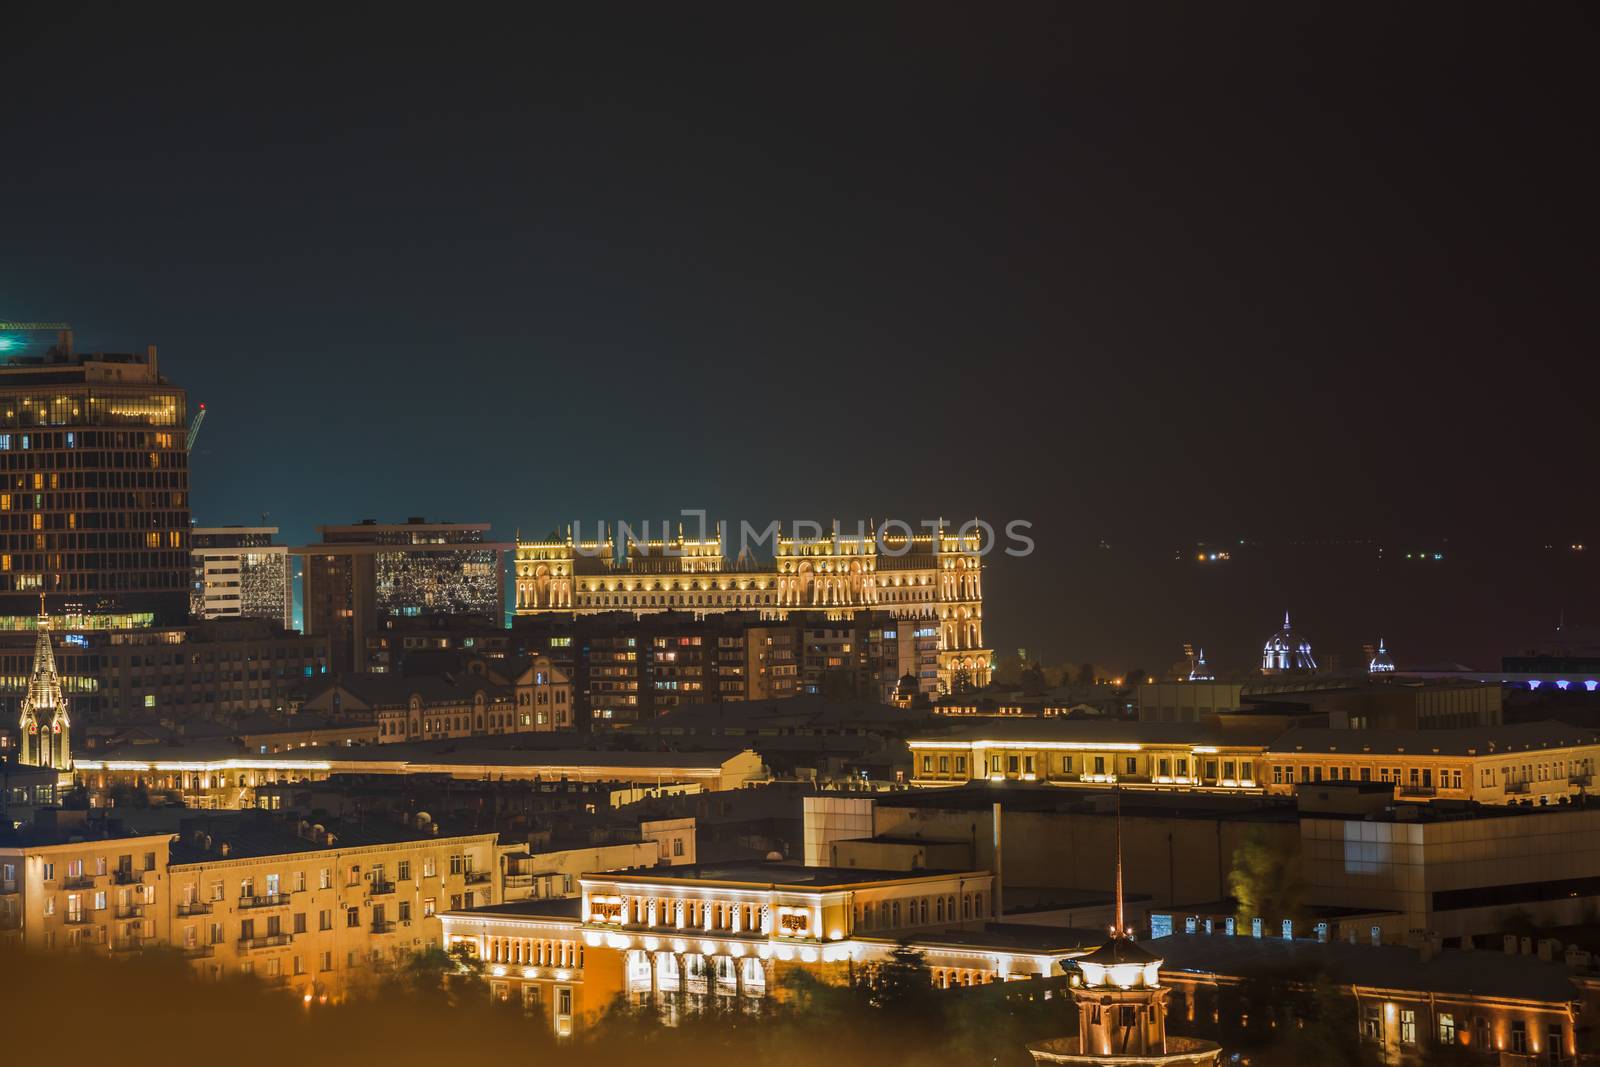 Baku in the night by takepicsforfun